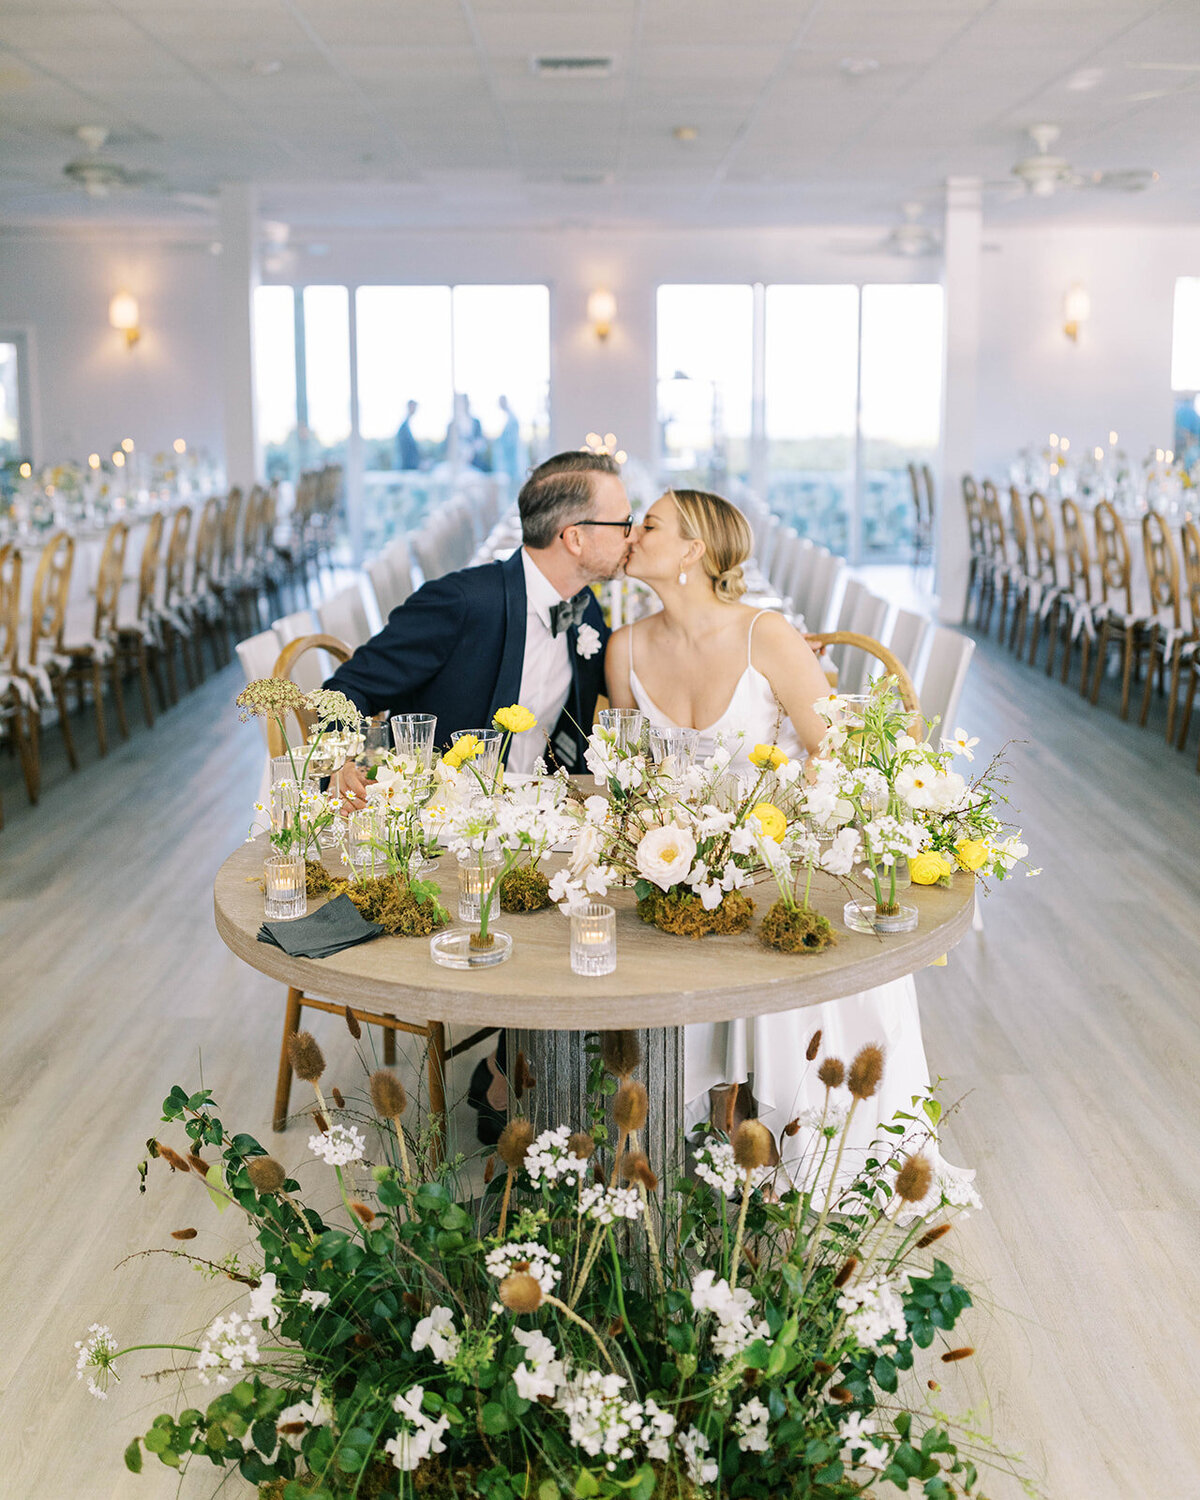 tess & DB - bride & groom - Chrissy O_Neill & Co. - South Florida Wedding Photographer-159